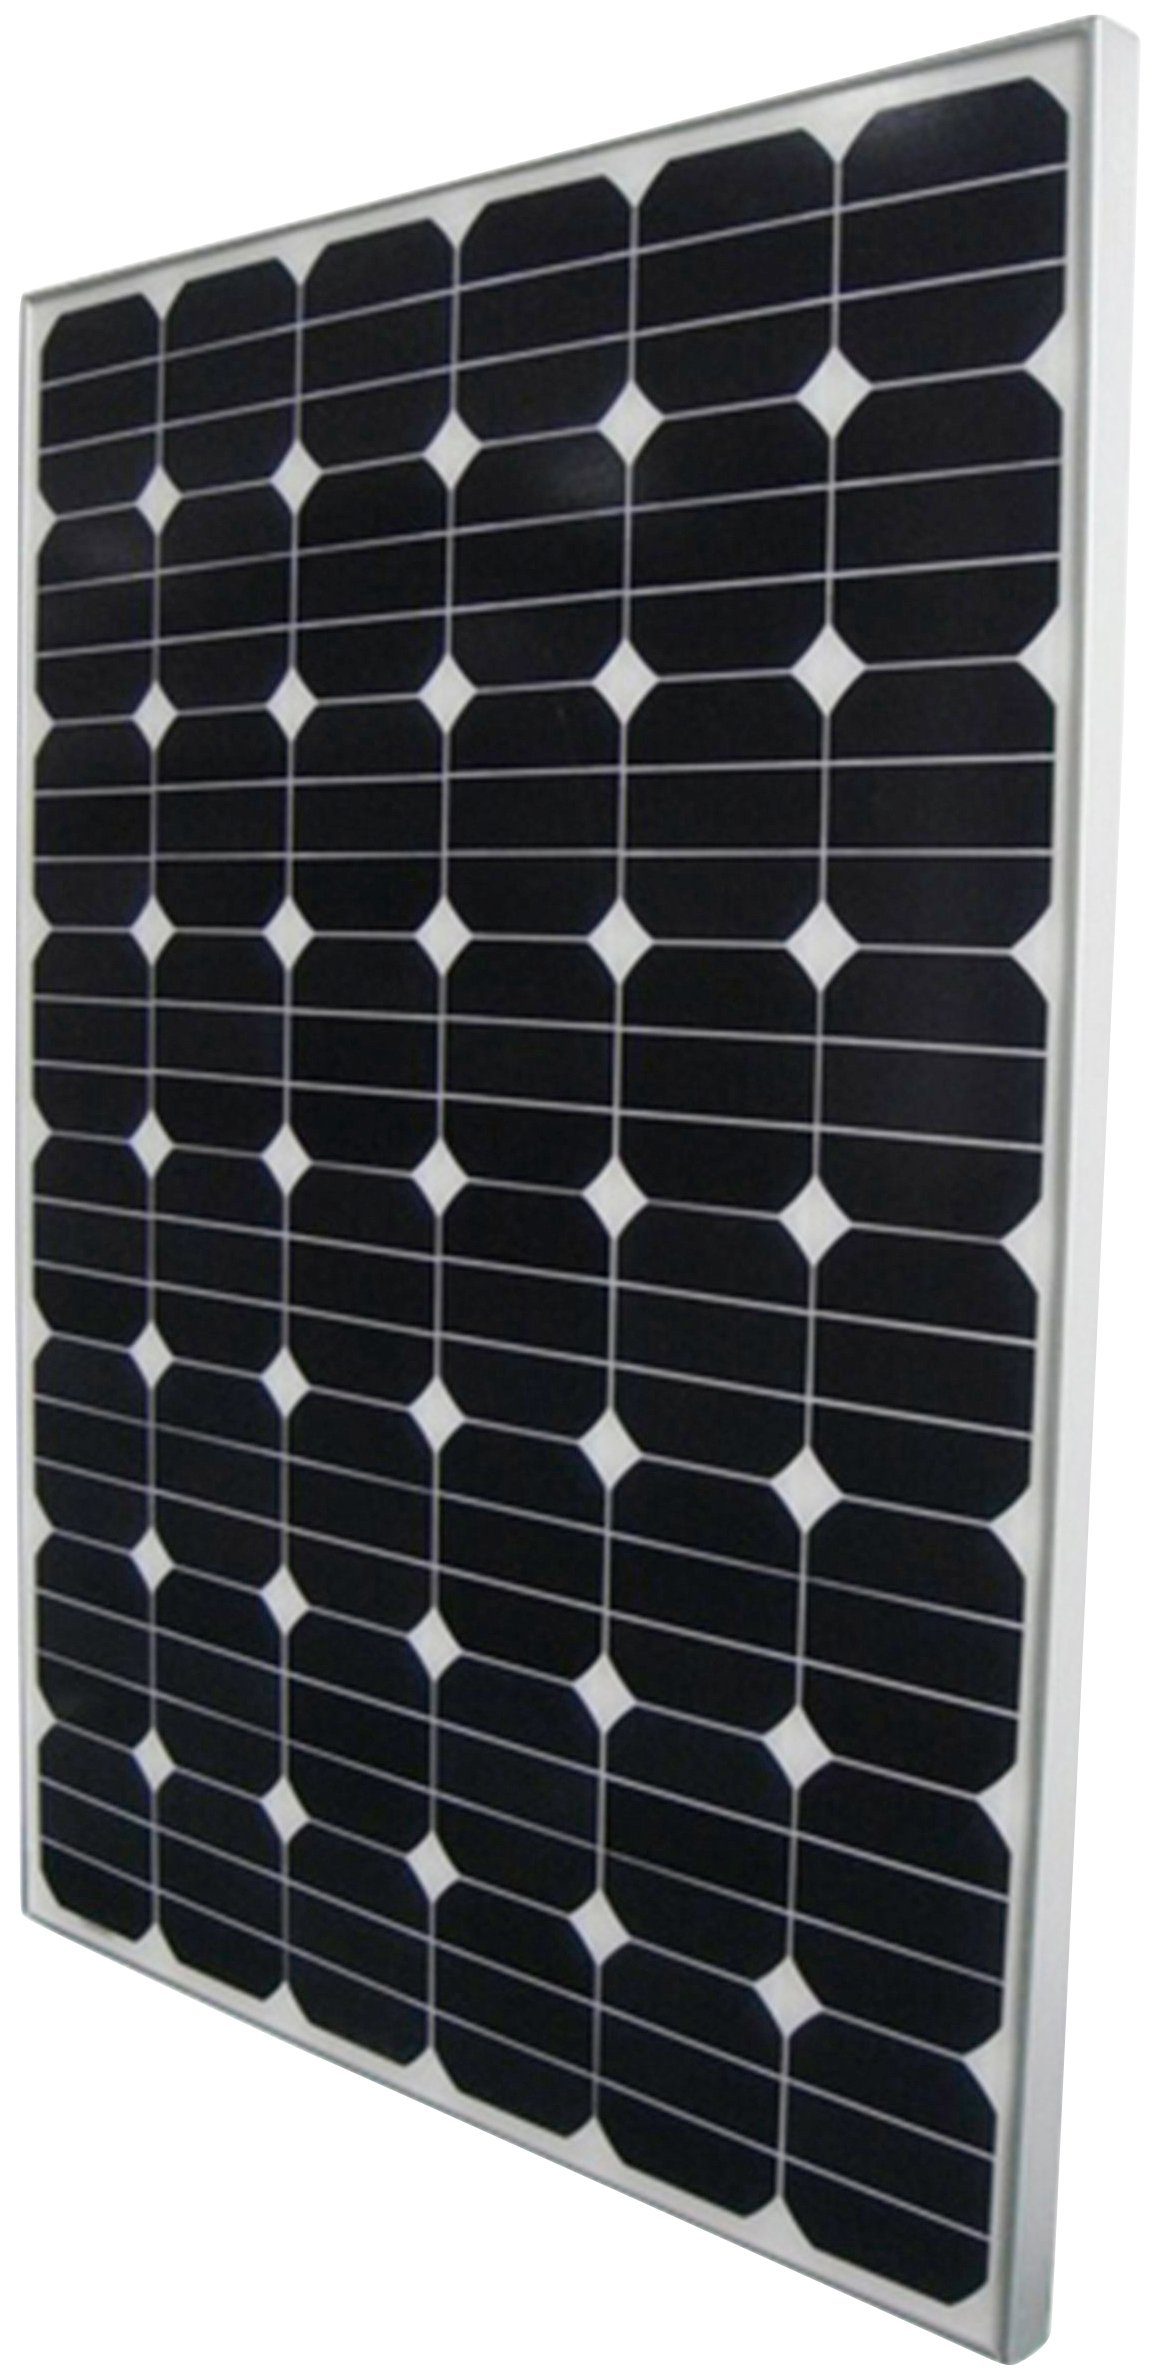 Phaesun Solarmodul Sun Peak SPR 170_12, 170 W, 12 VDC, IP65 Schutz